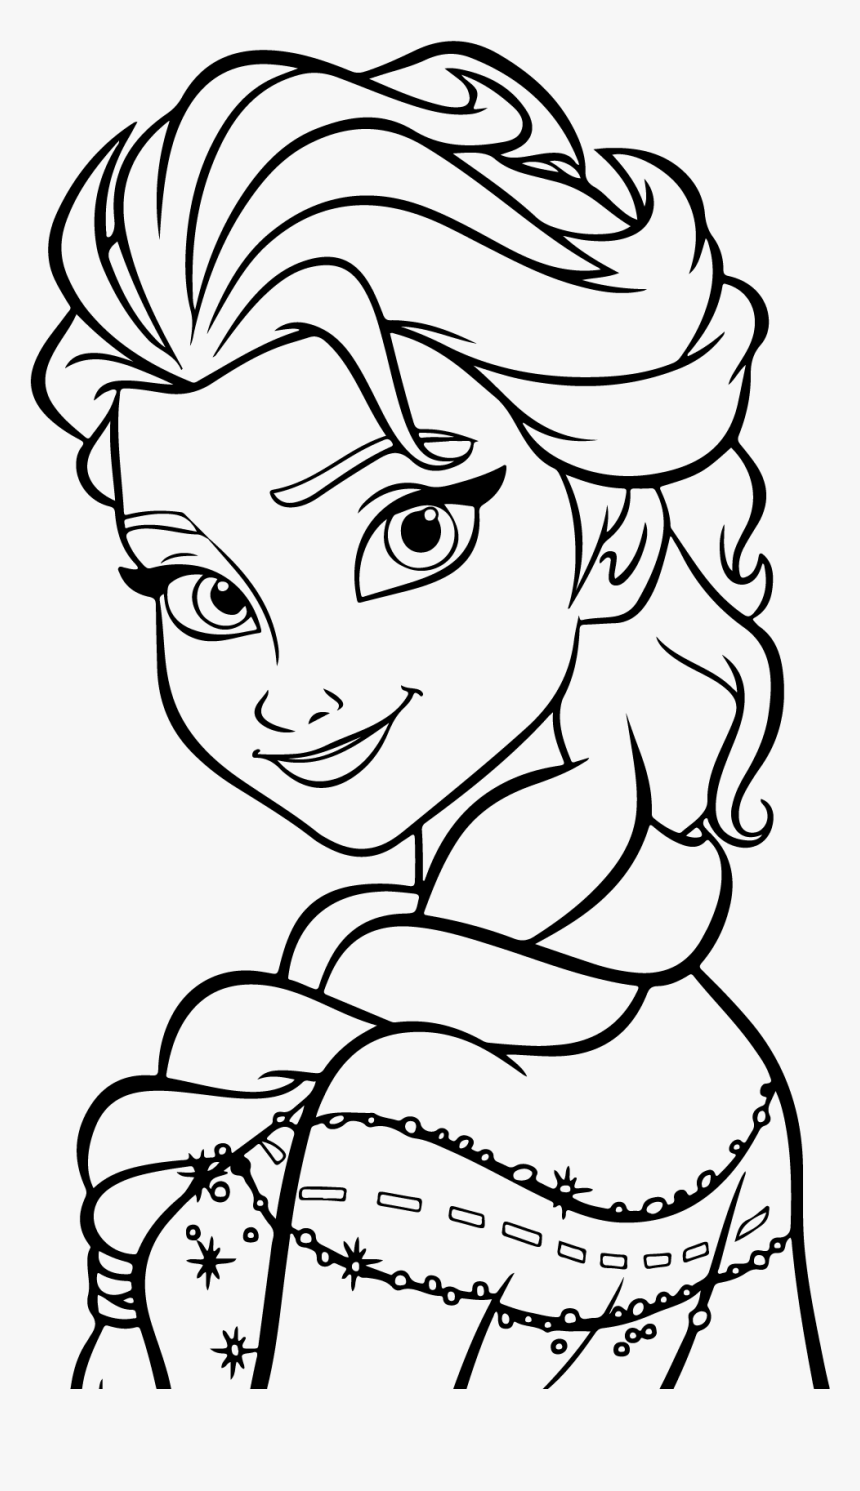 How to Draw Elsa | Disney Frozen 2 - YouTube